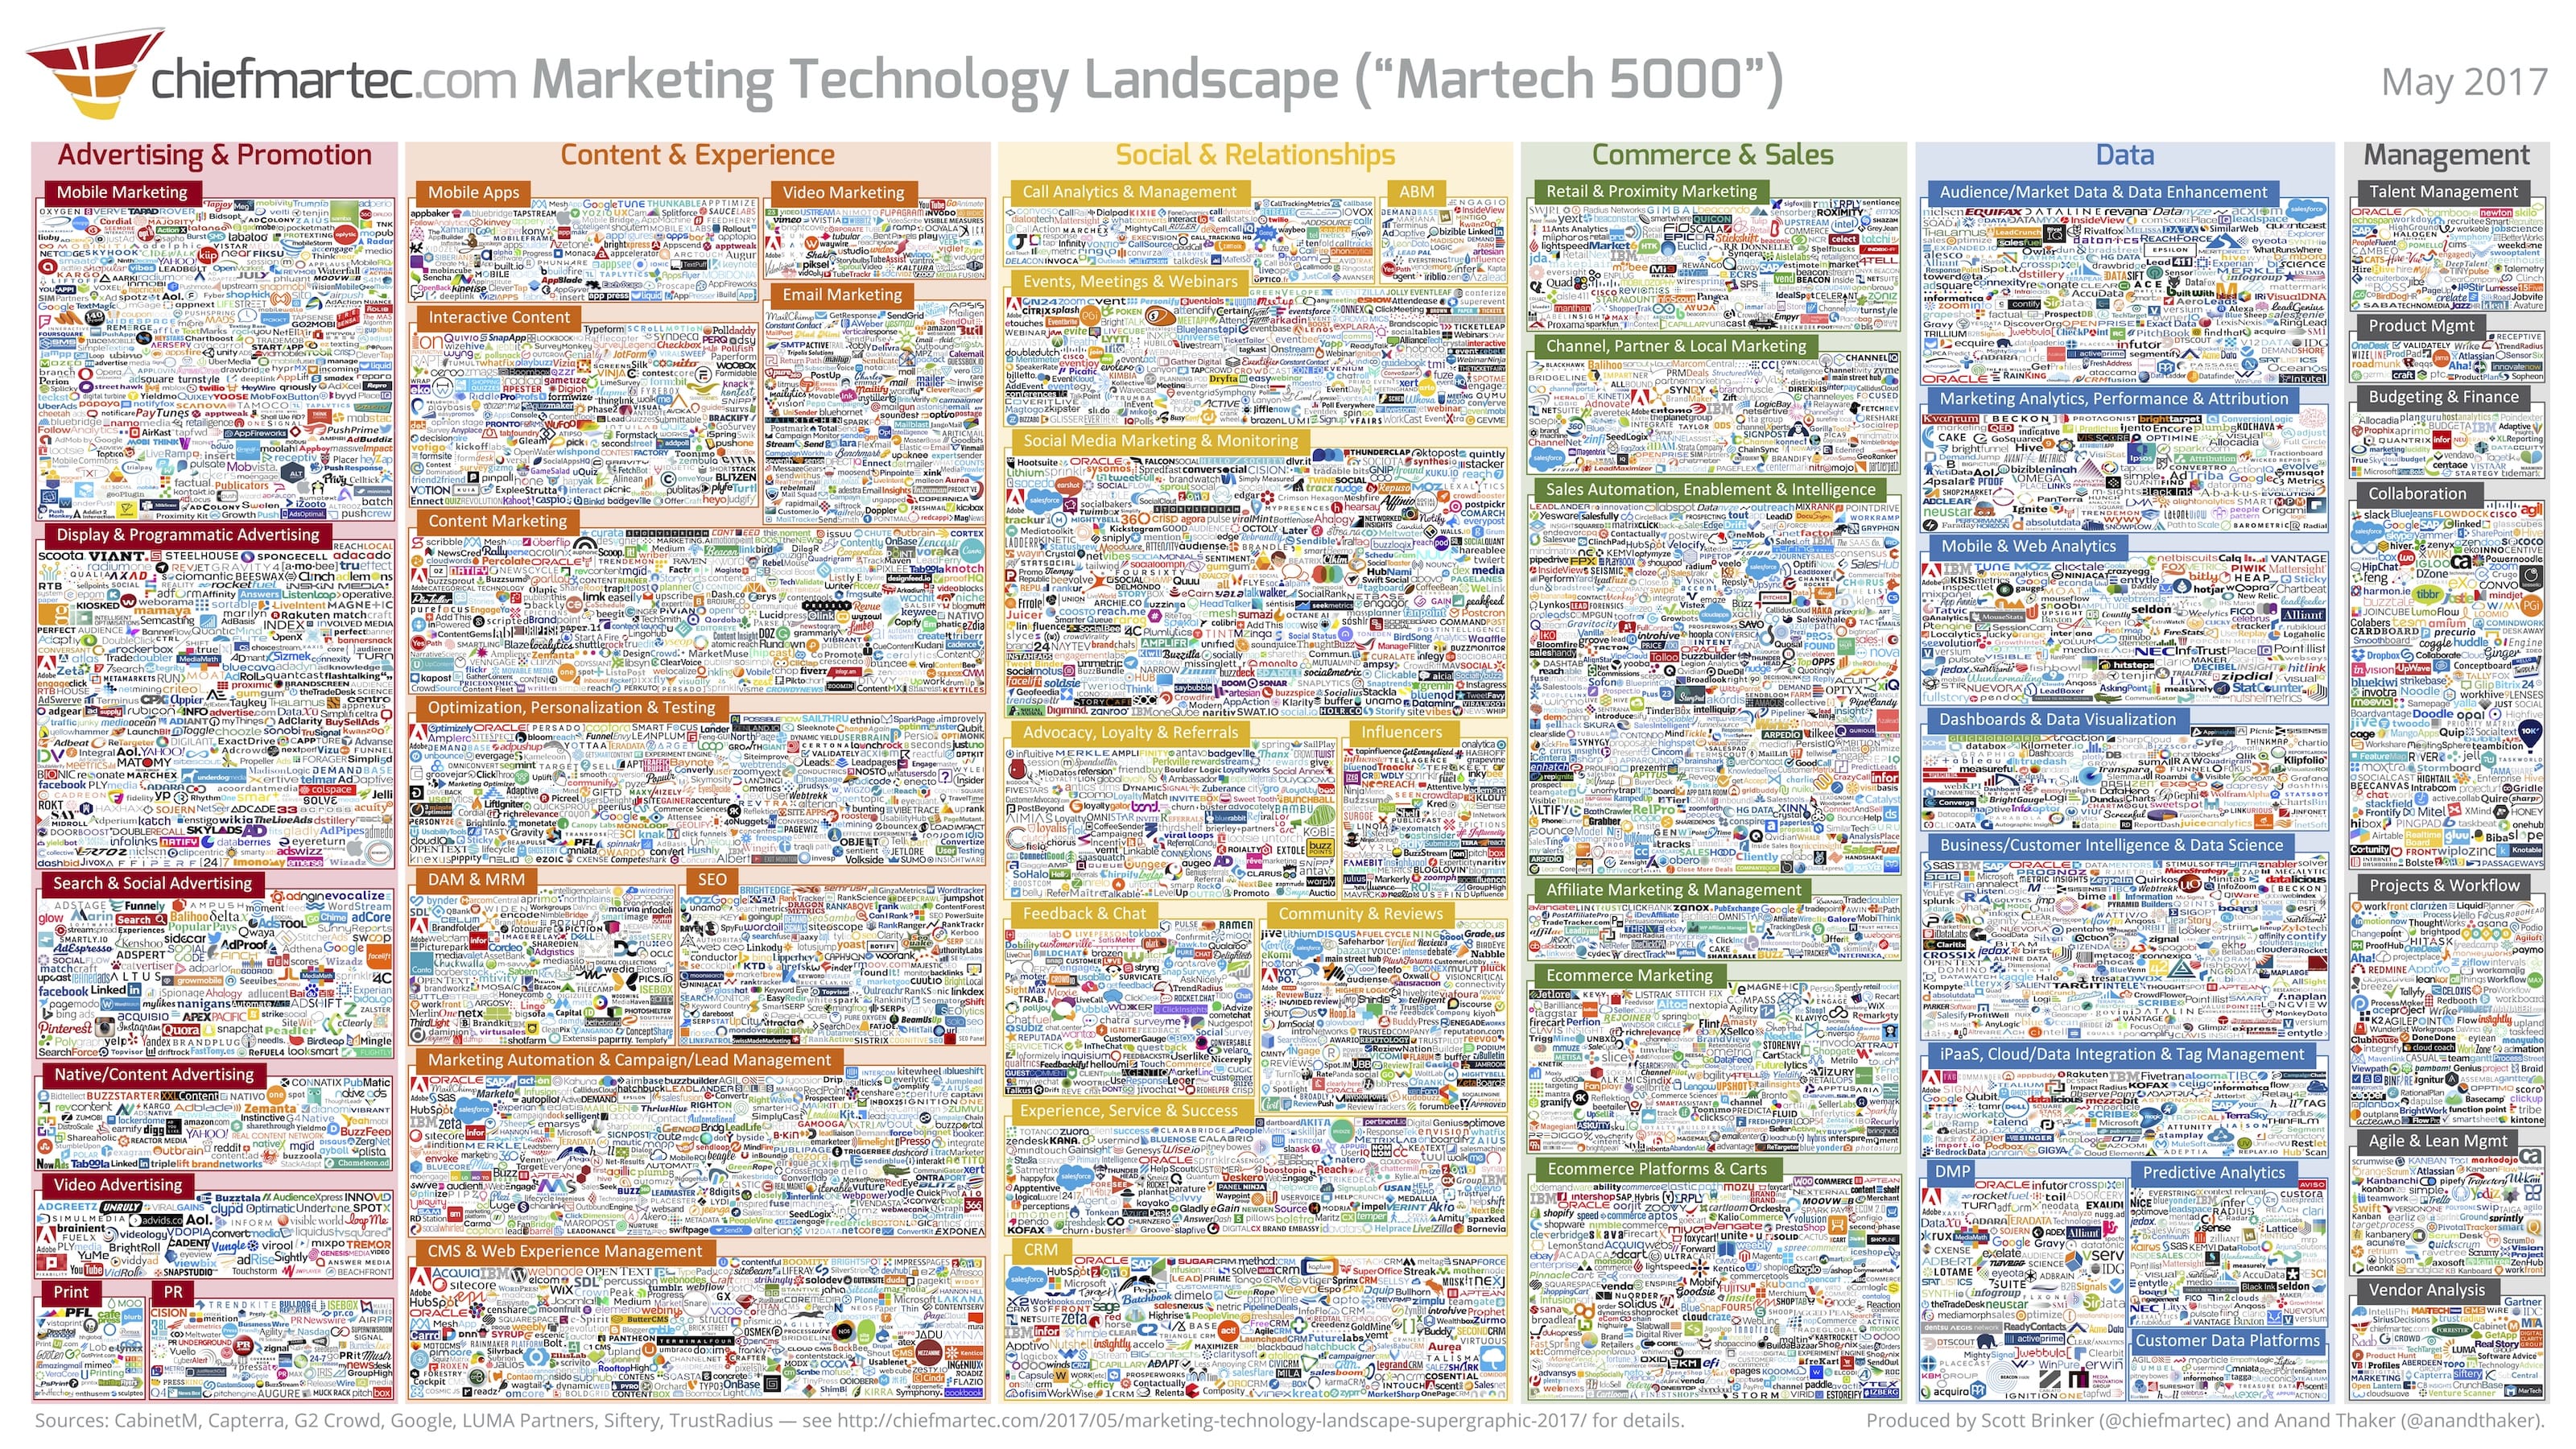 Marketing Technology Landscape Supergraphic (2017): Martech 5000